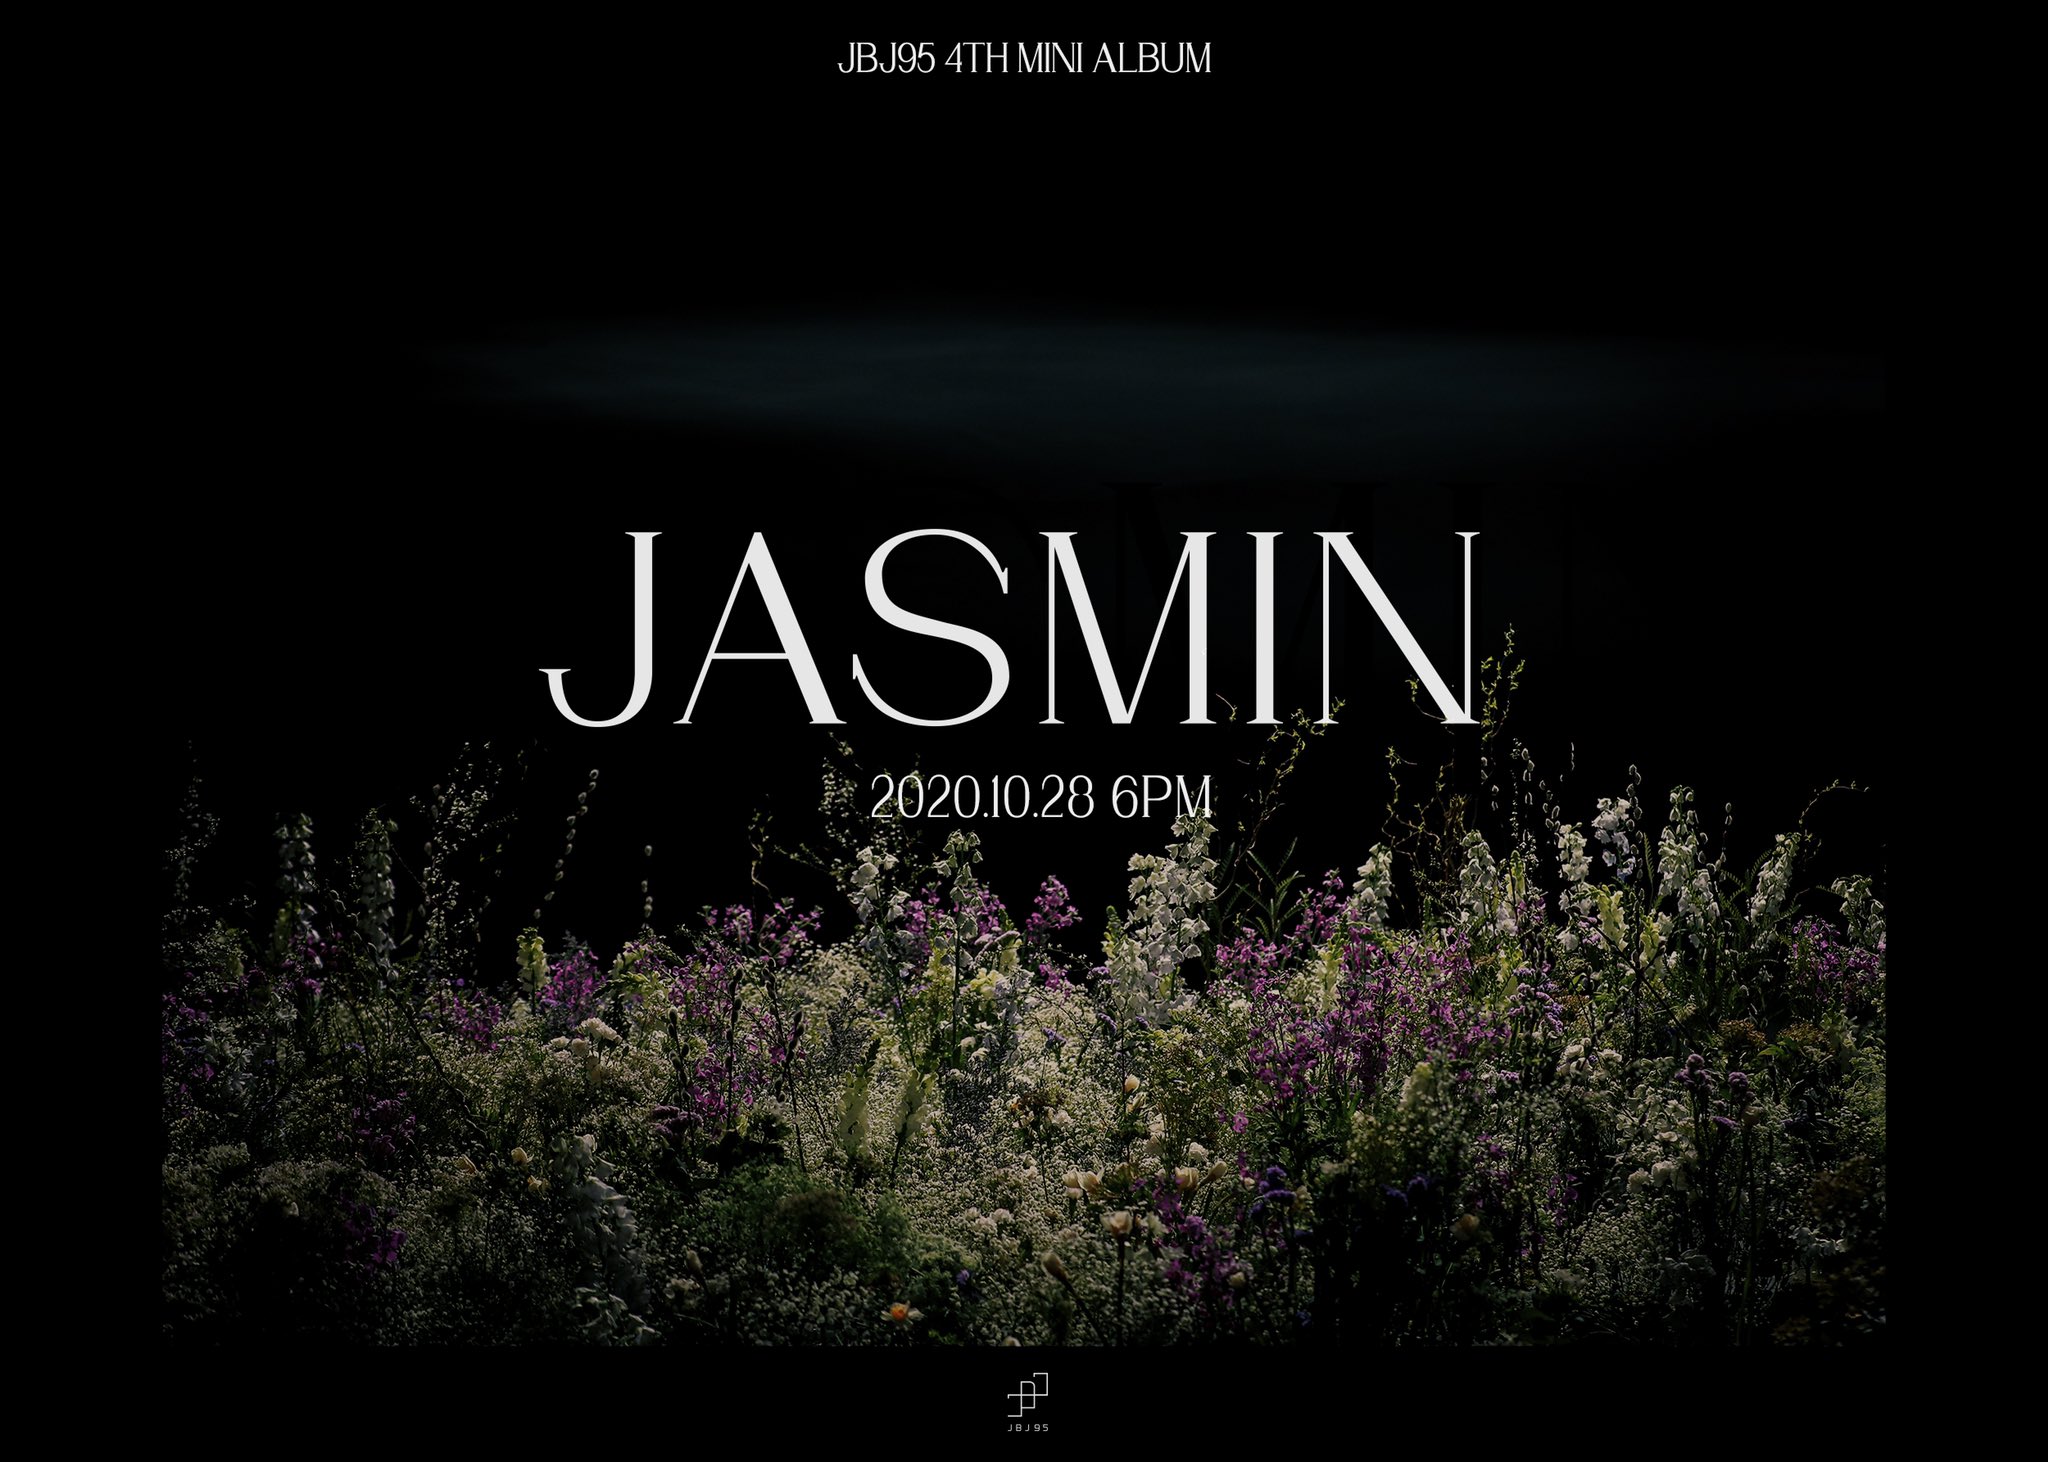 jbj95-confirmed-to-make-comeback-with-mini-album-jasmine-on-october-28-3